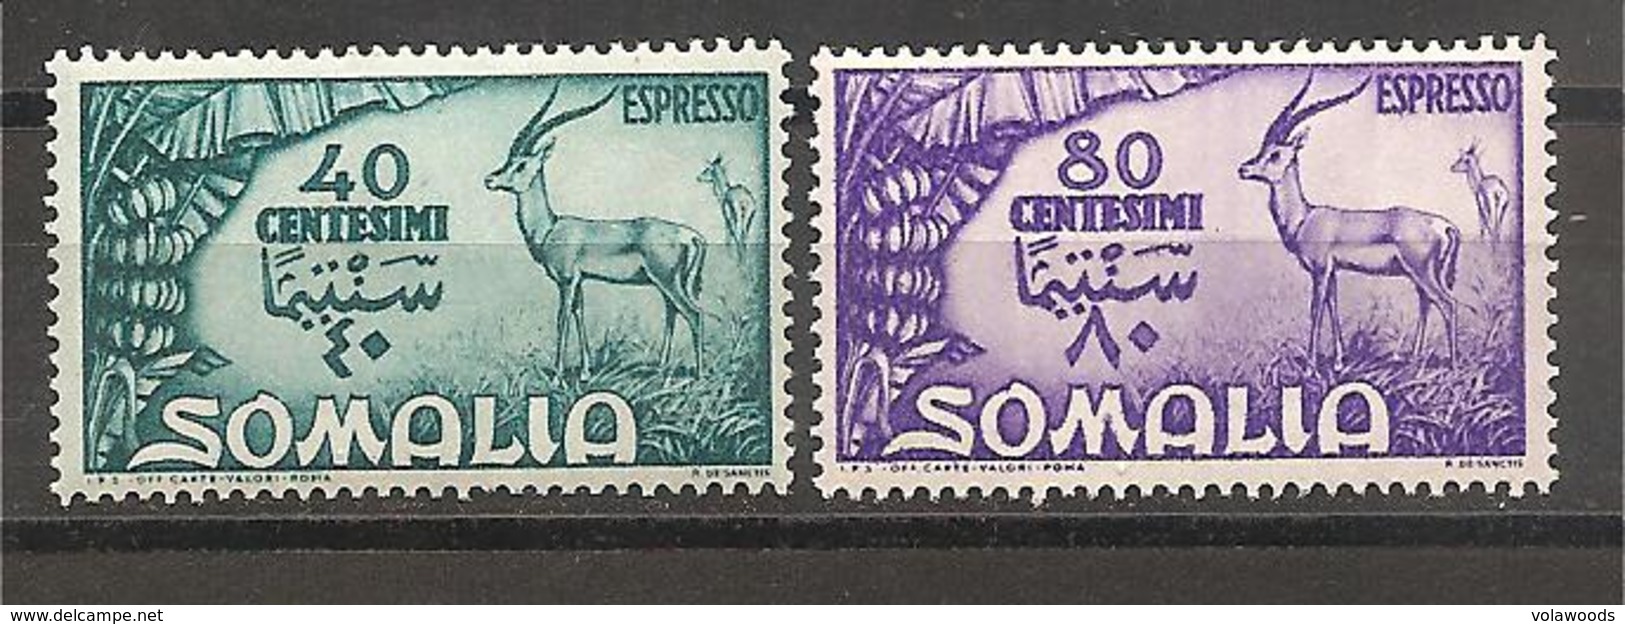 Somalia AFIS - Serie Completa Nuova Espressi MNH: Serie Pittorica - 1950 - Somalia (AFIS)